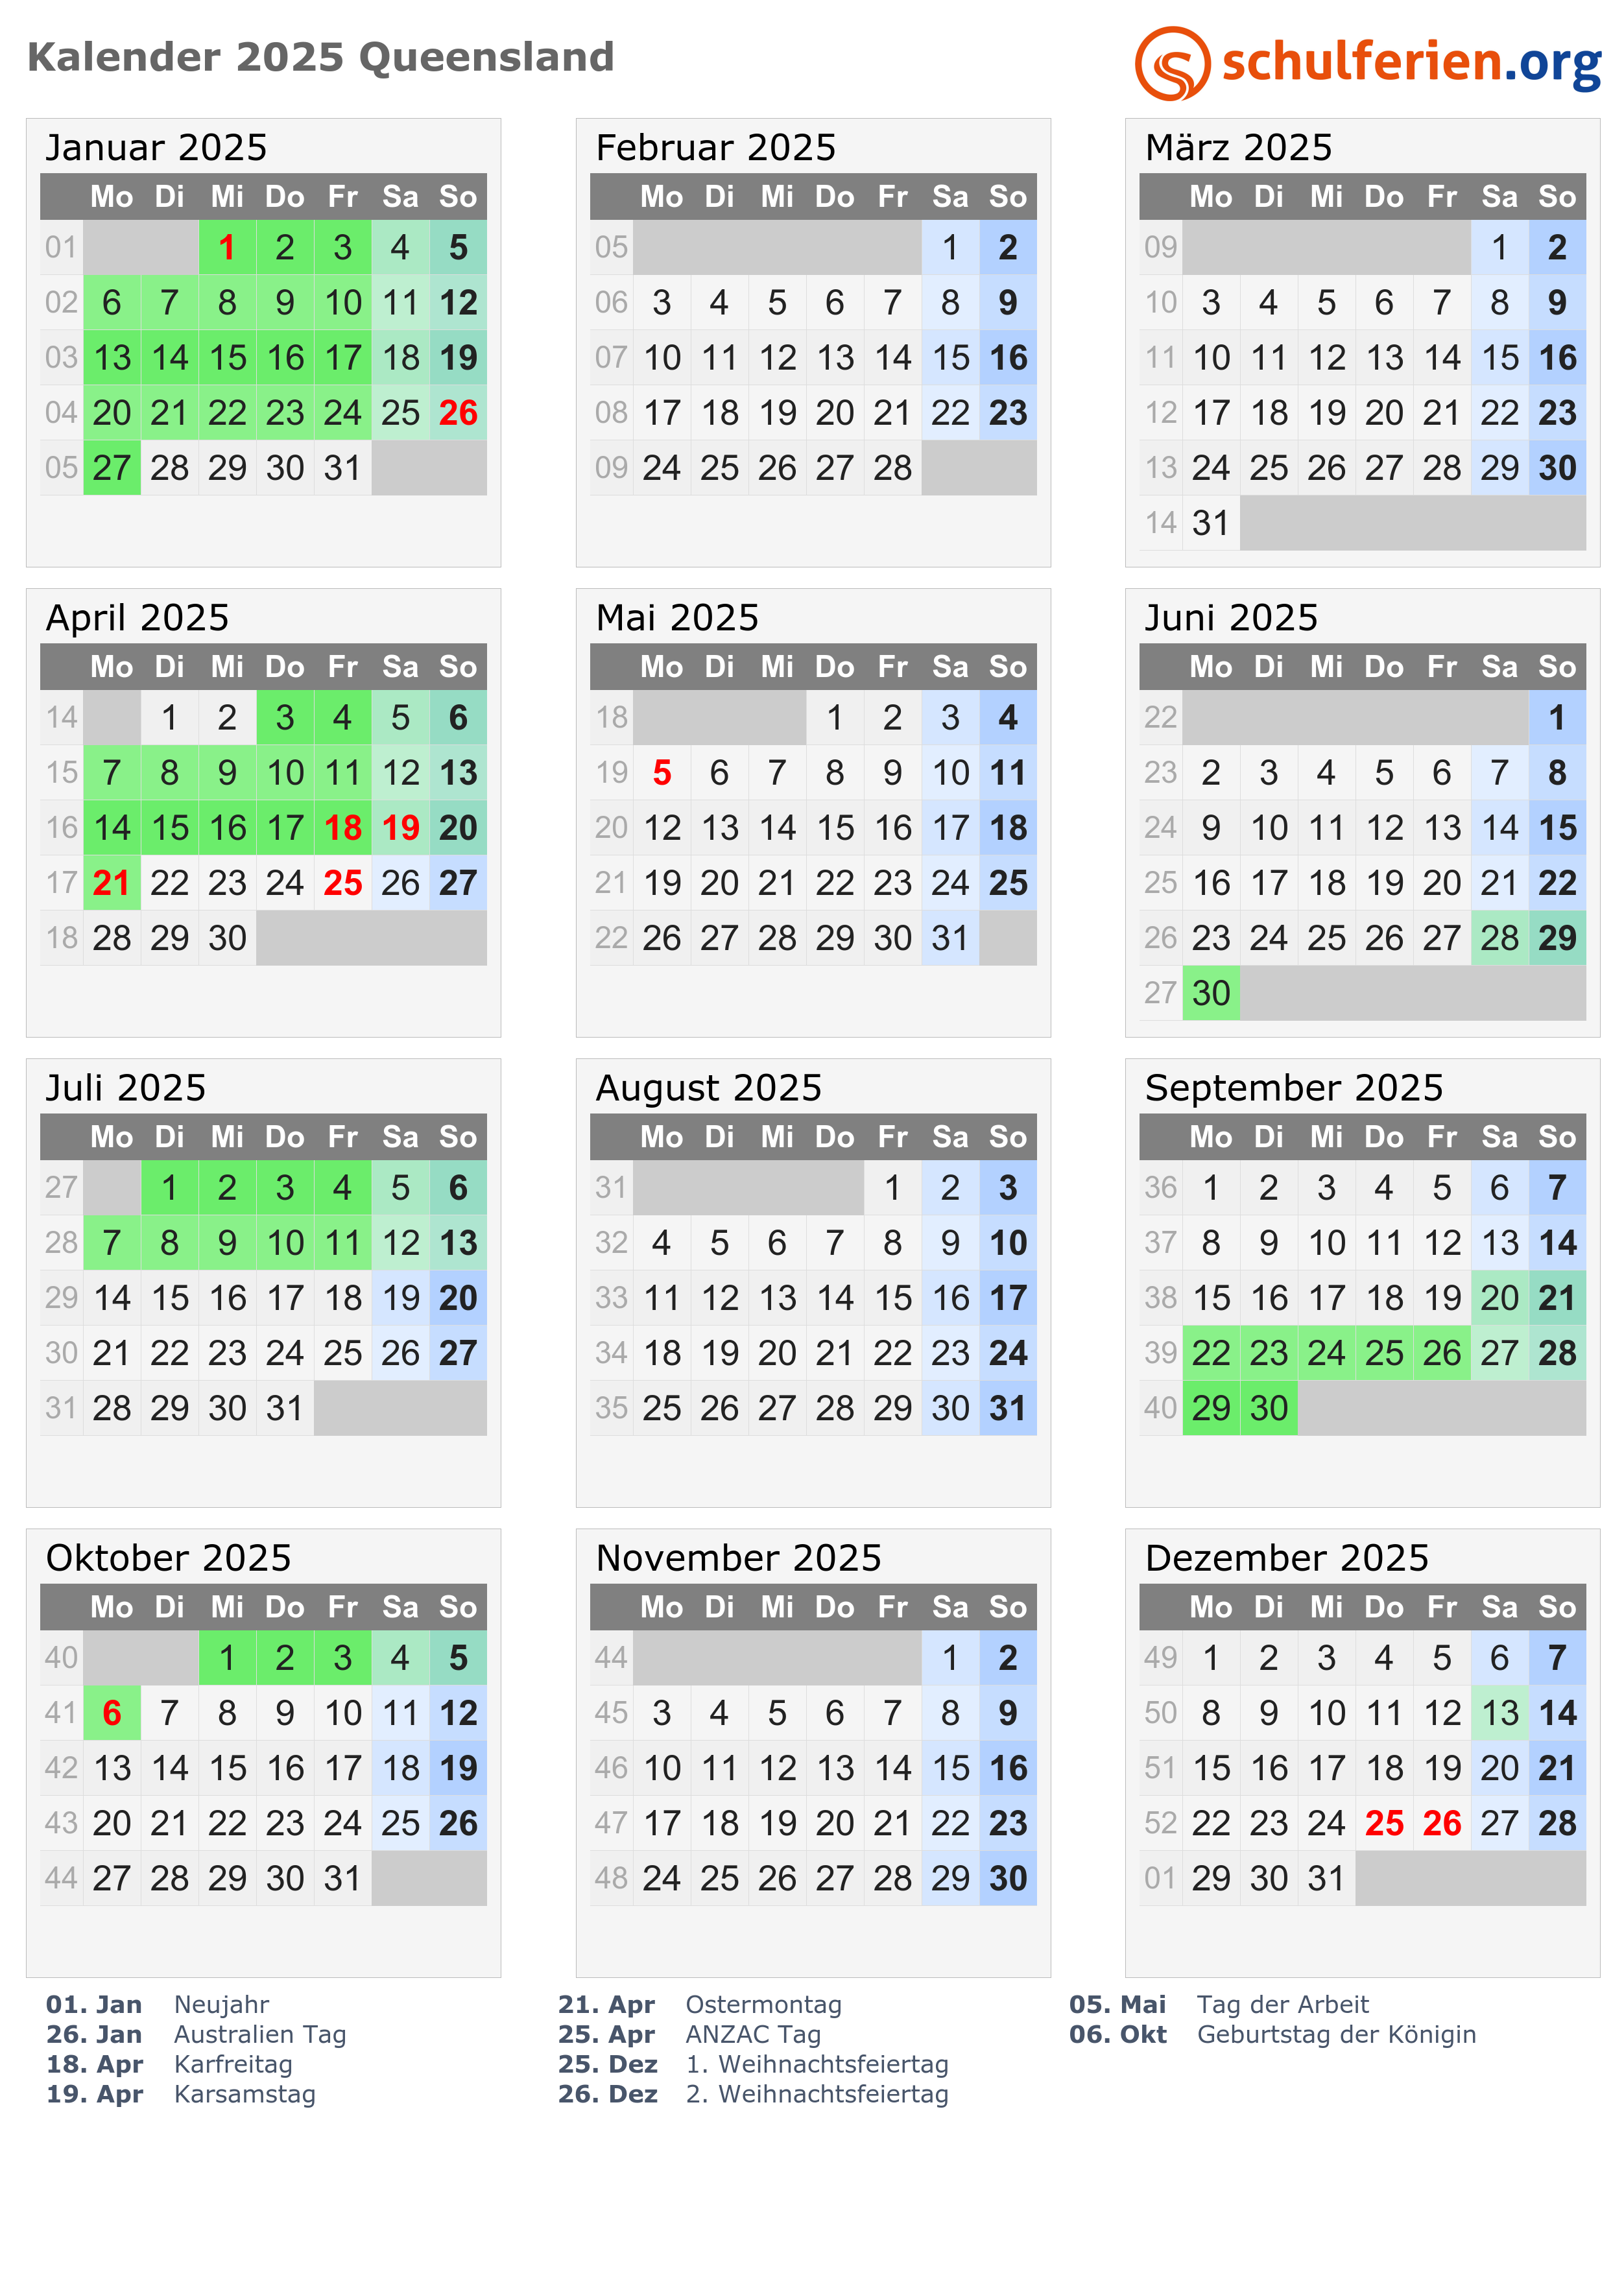 2025-printable-calendar-with-holidays-portrait-orientation